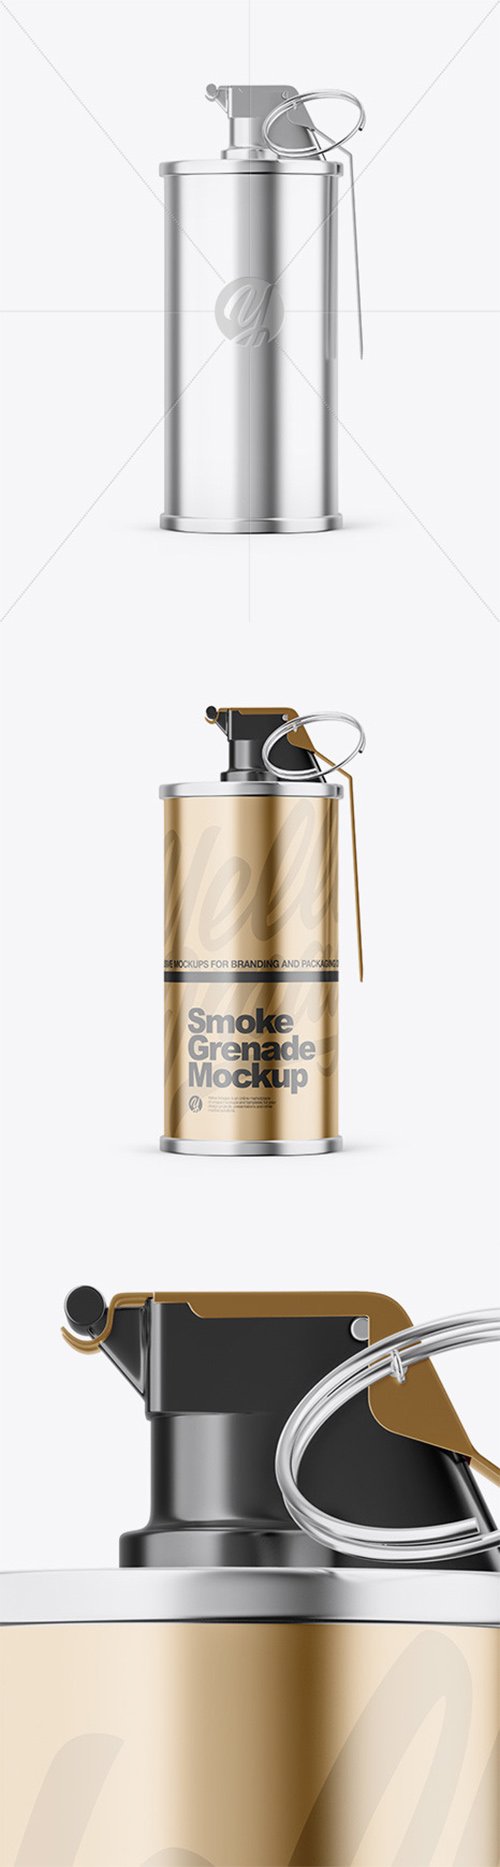 Glossy Metallic Smoke Grenade Mockup 61918